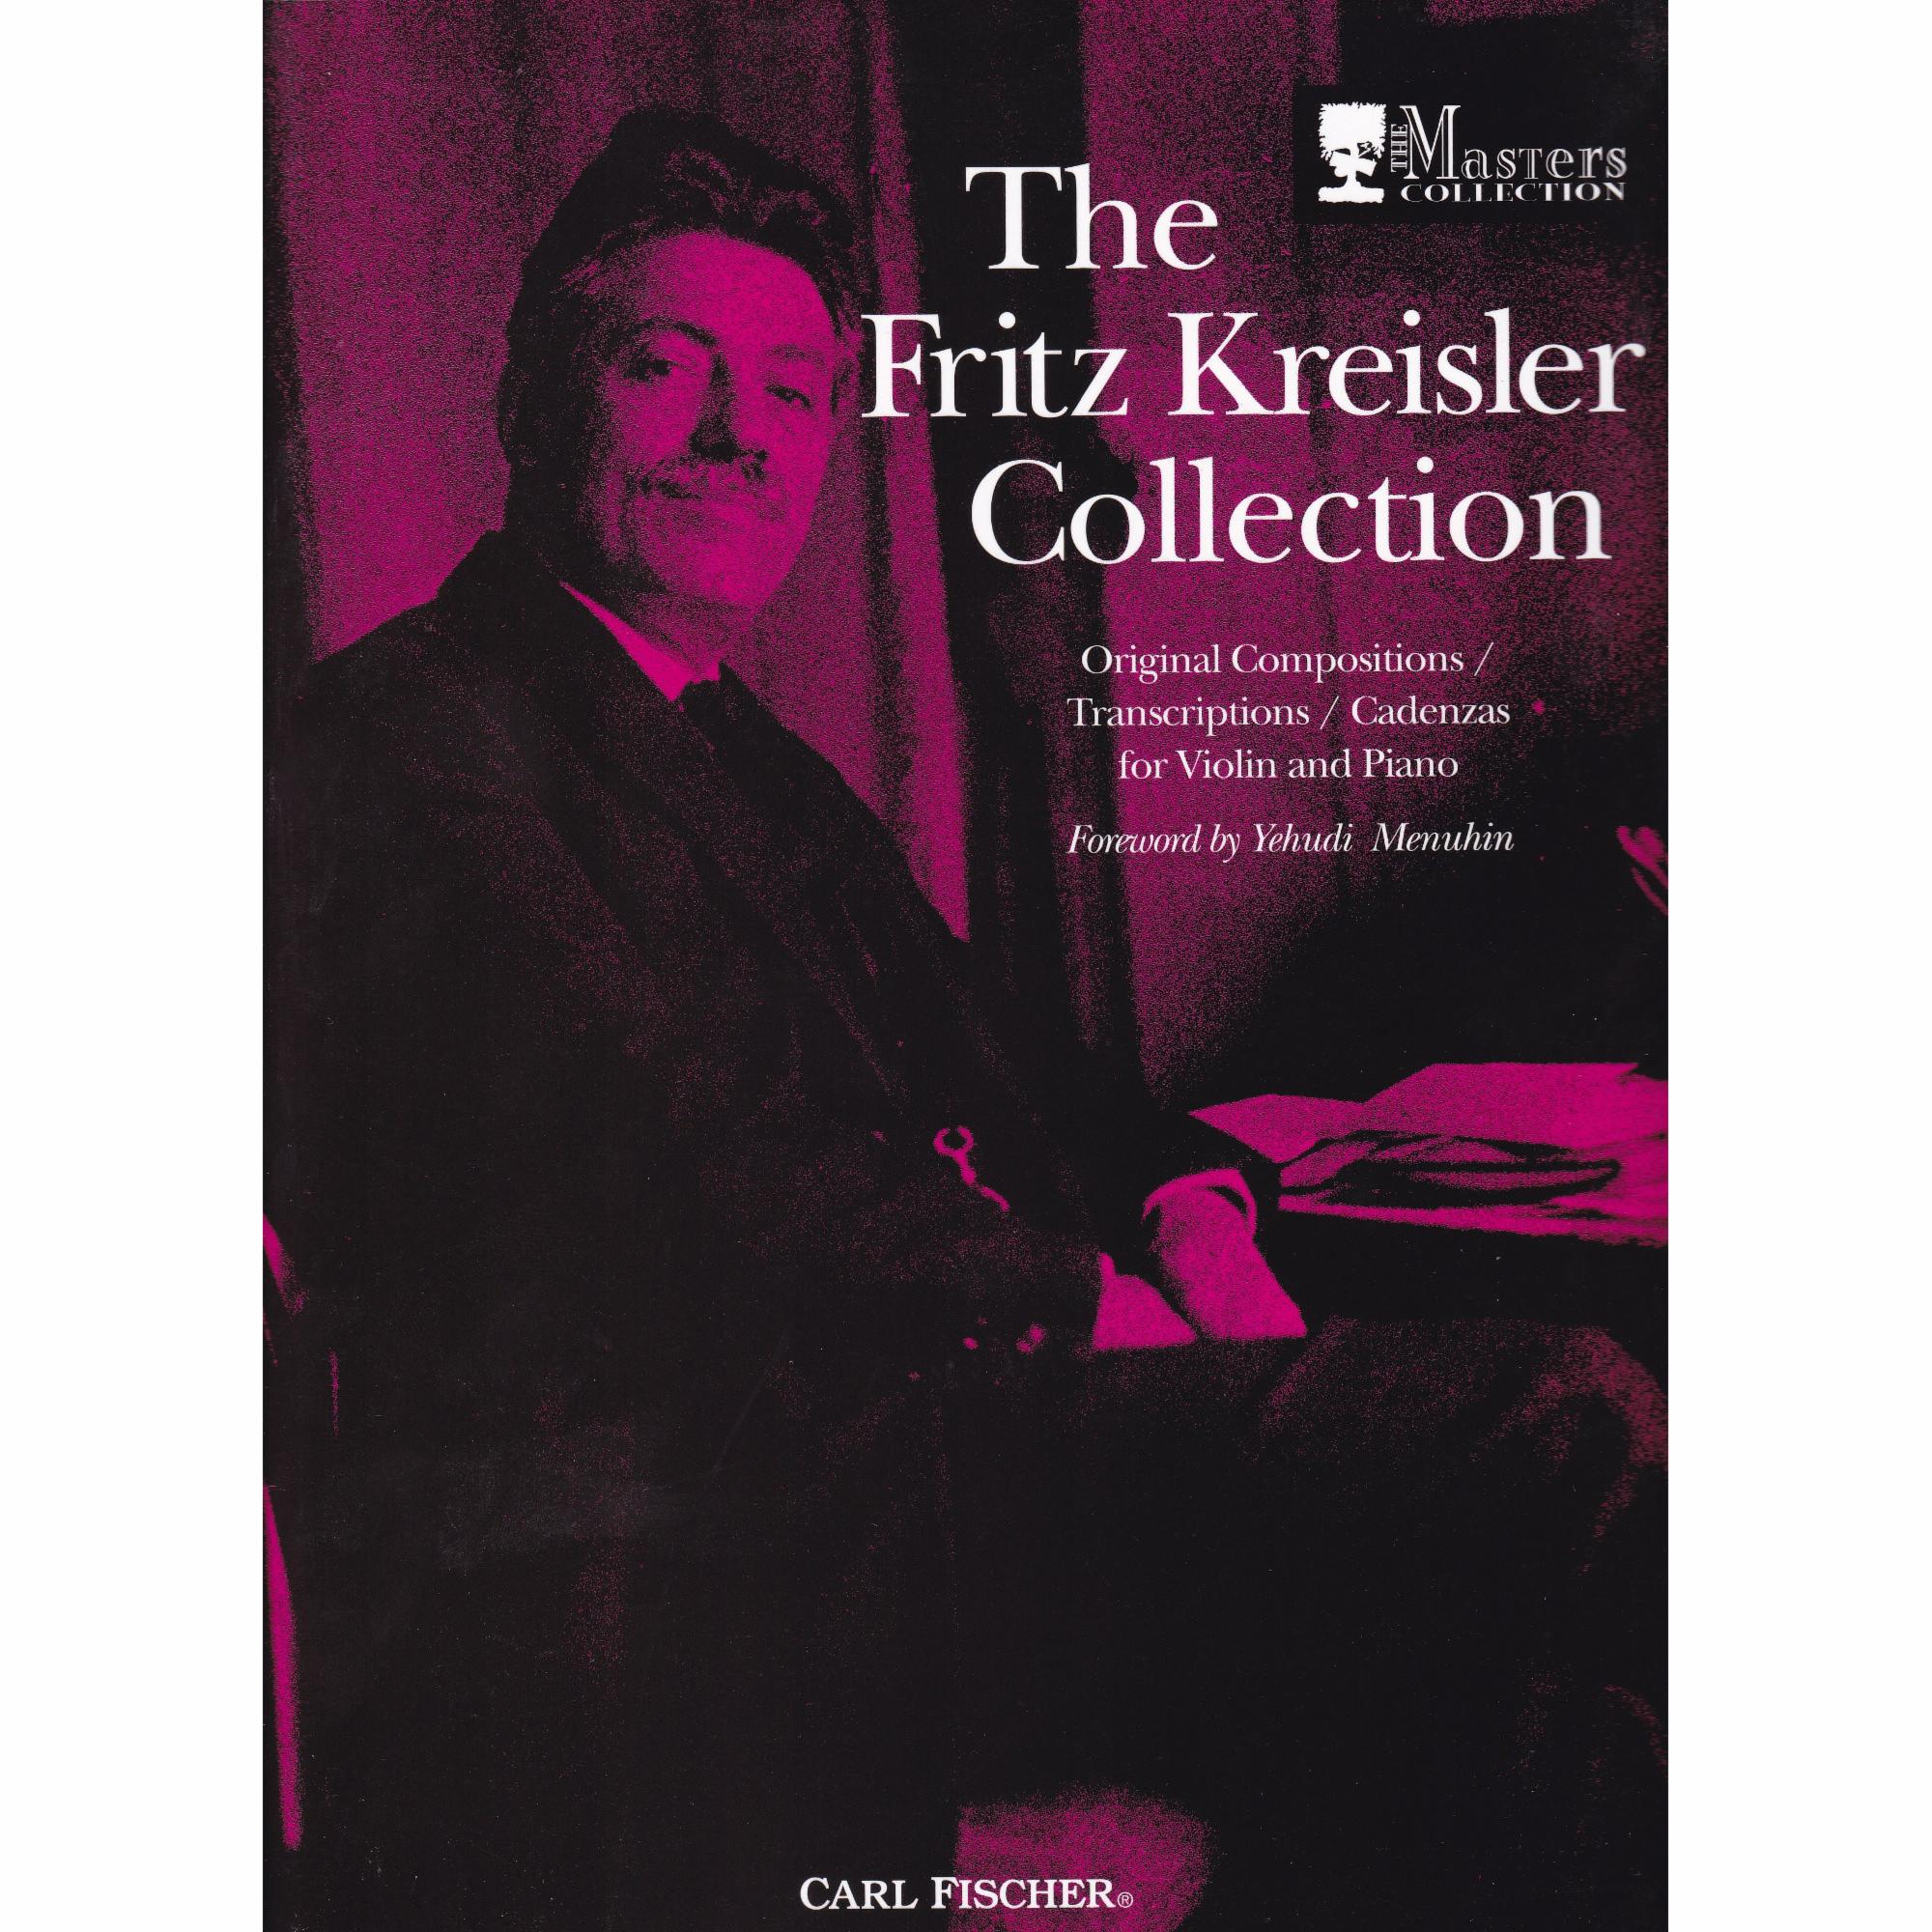 The Fritz Kreisler Collection, Volume I